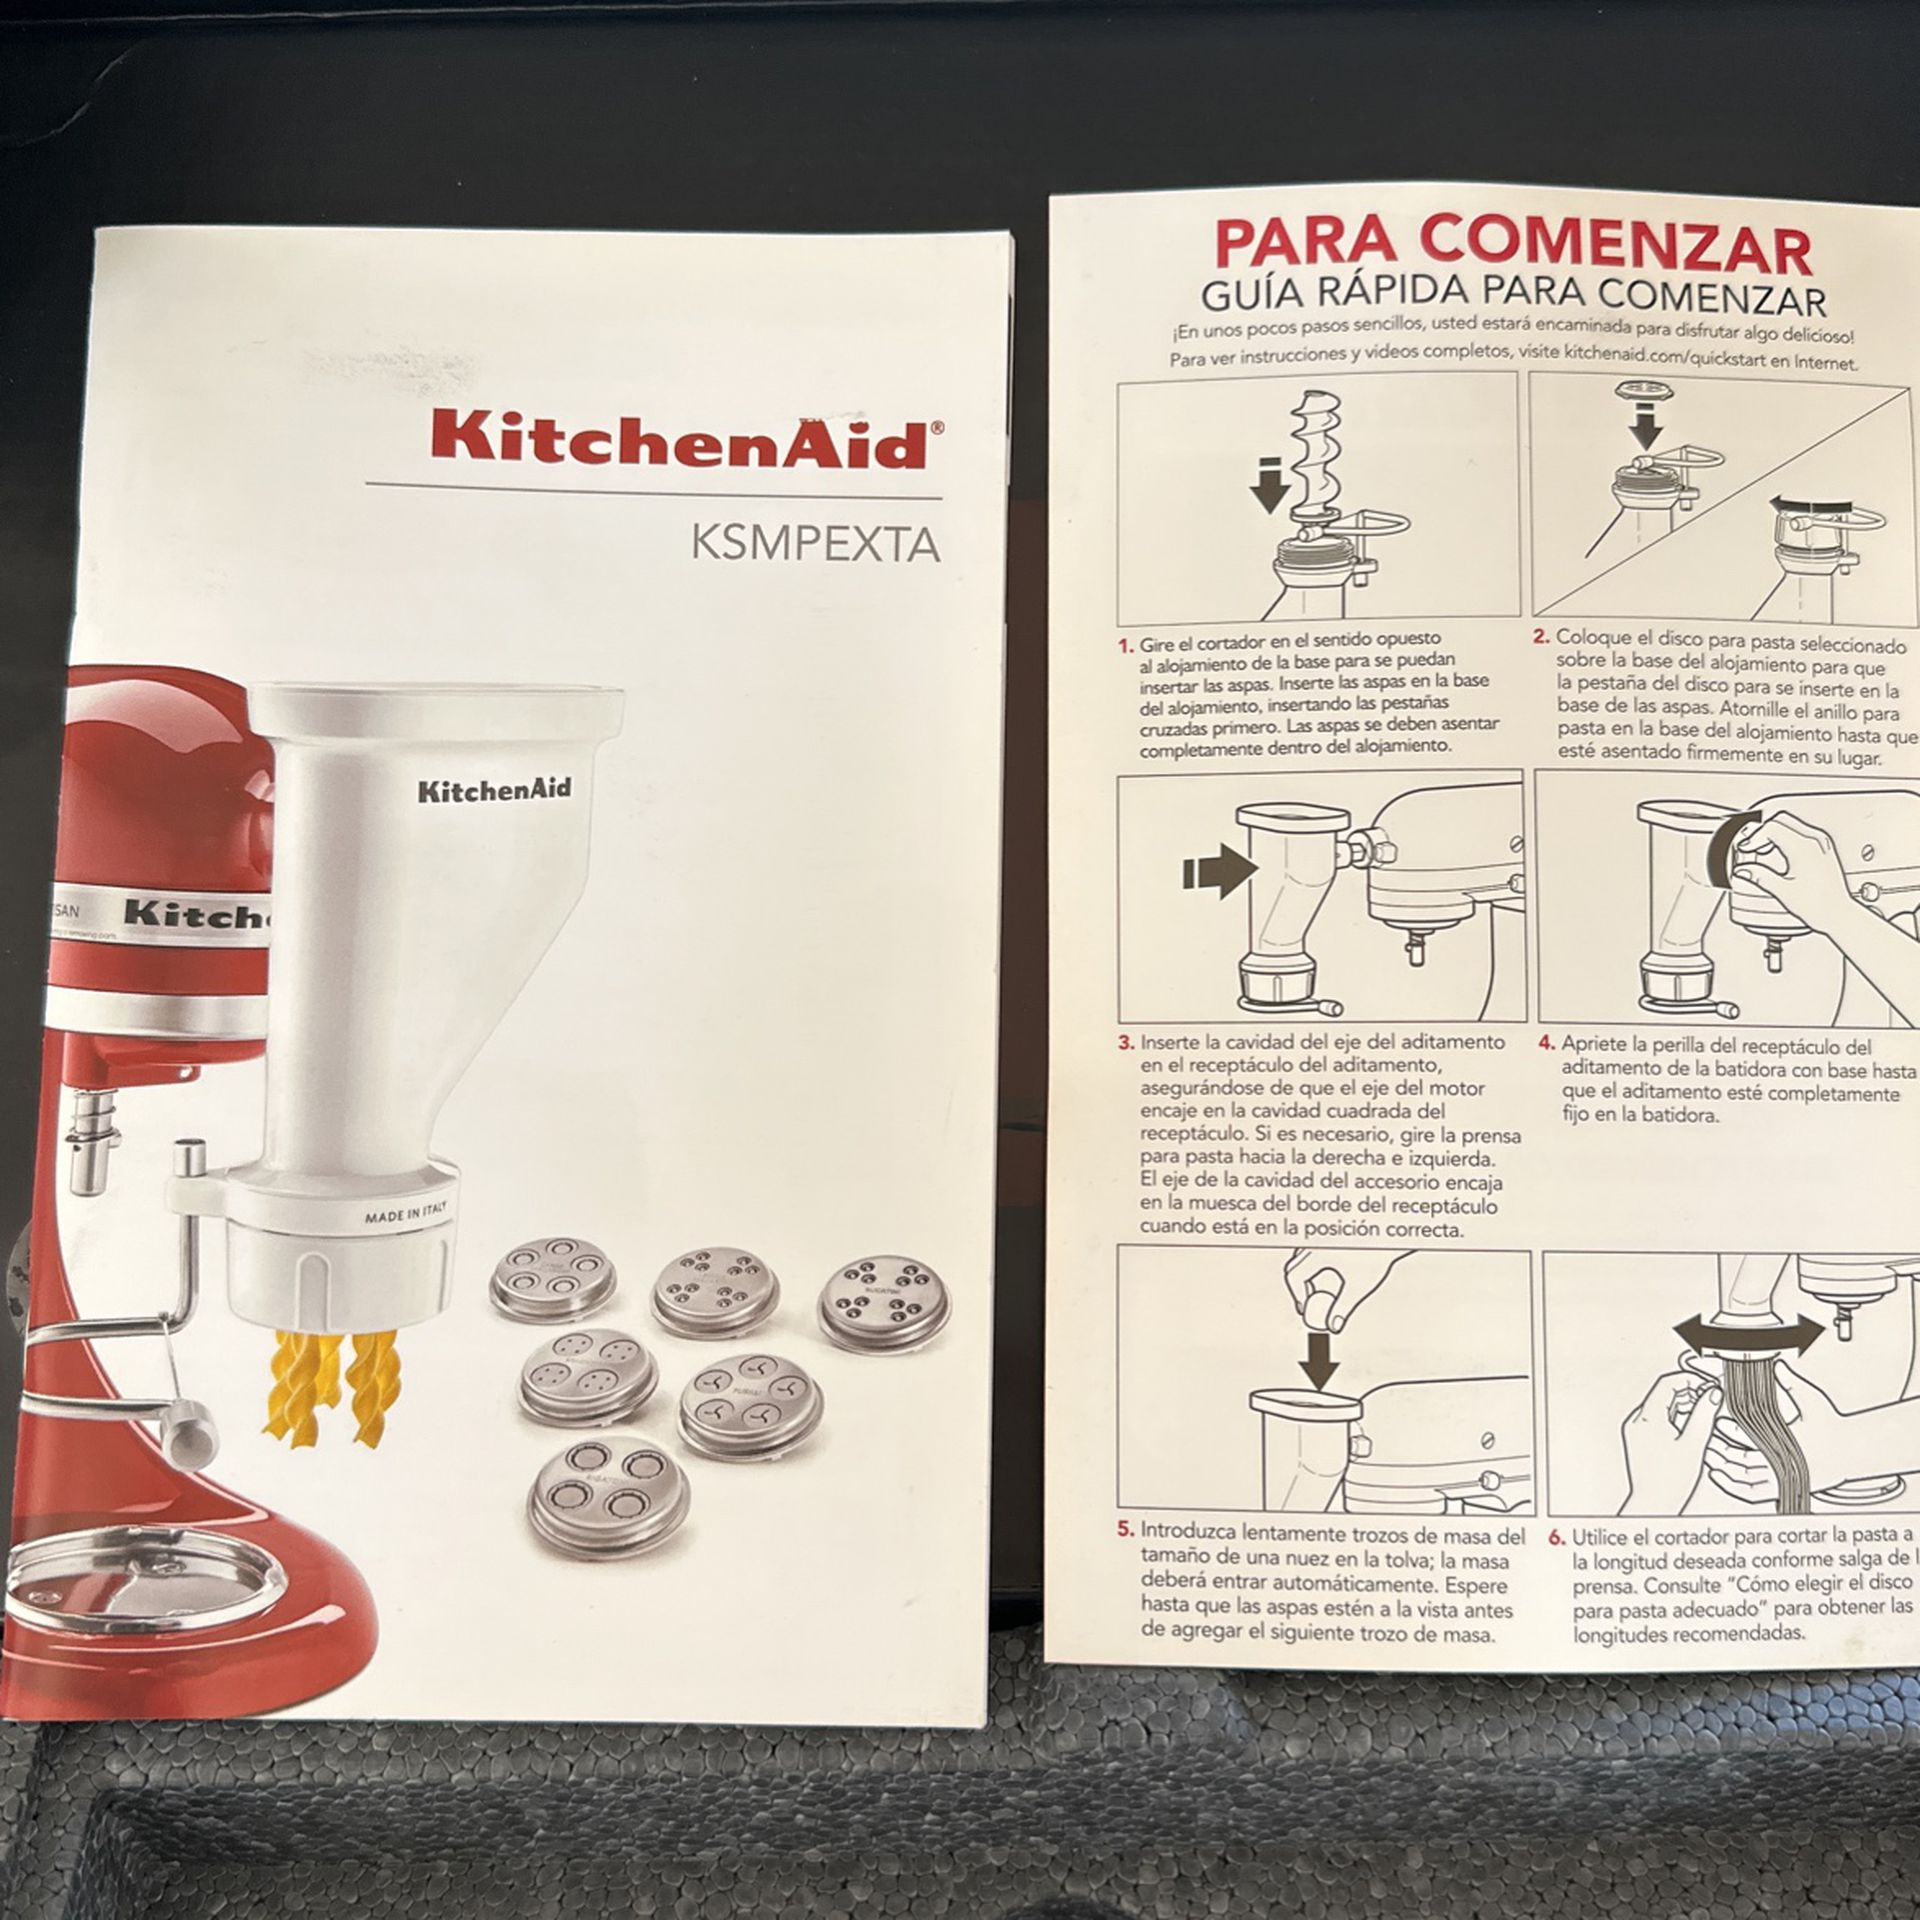 KitchenAid KSMPEXTA Gourmet Pasta Press Attachment with 6